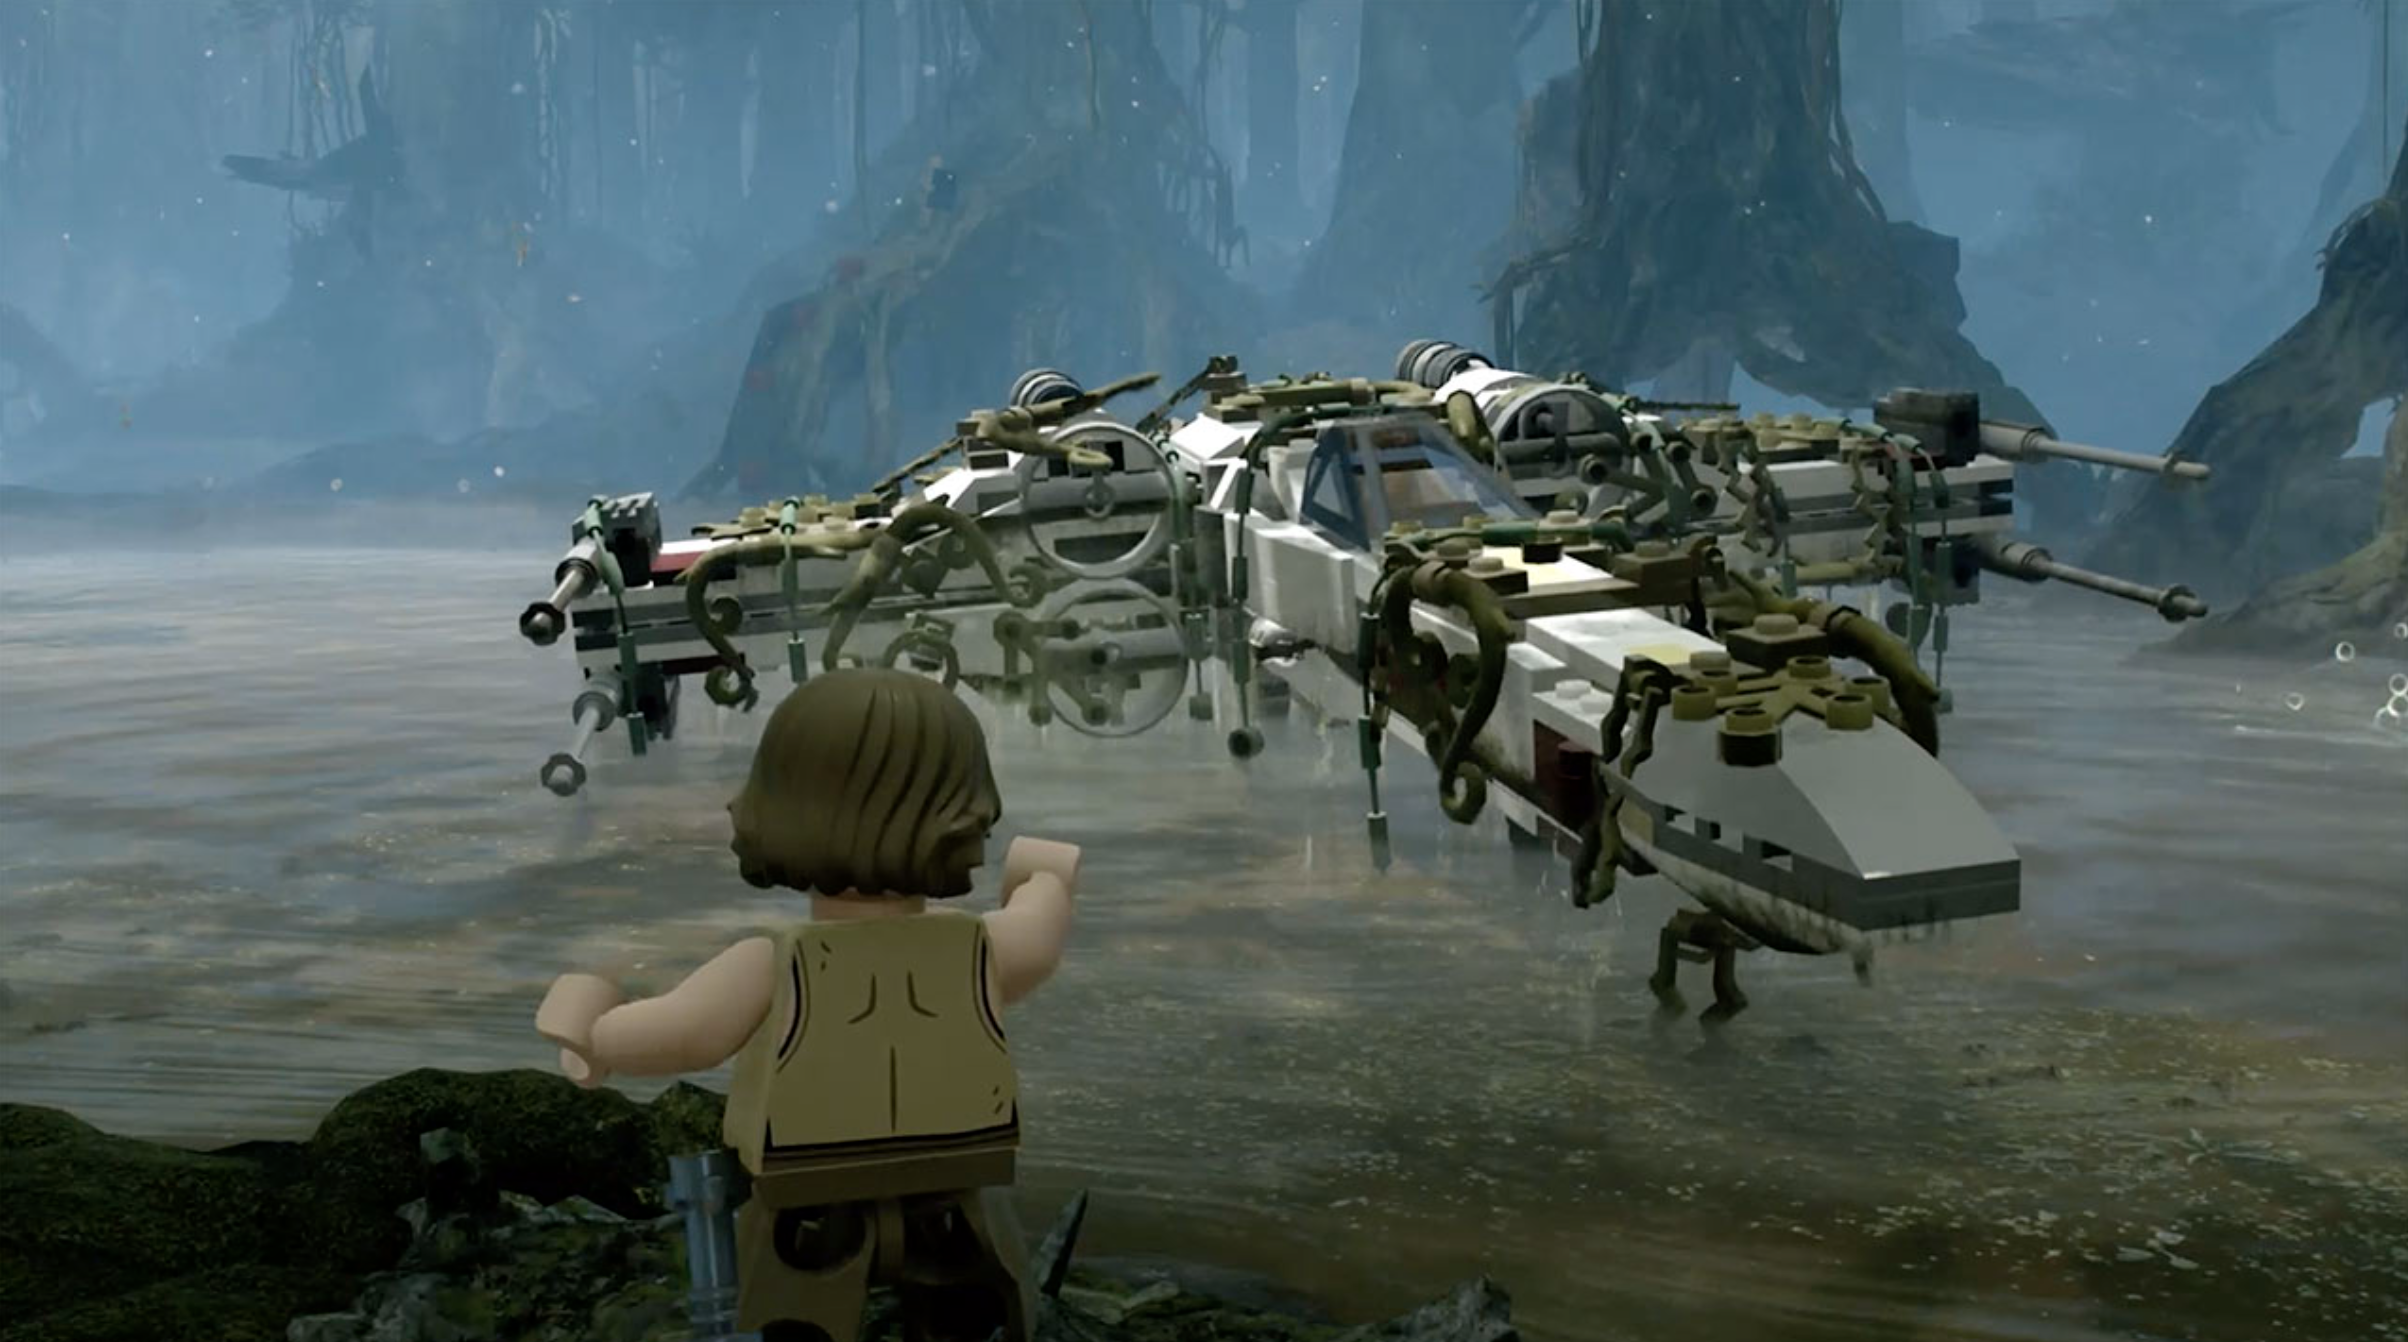 Lego Star Wars: The Skywalker Saga trailer still